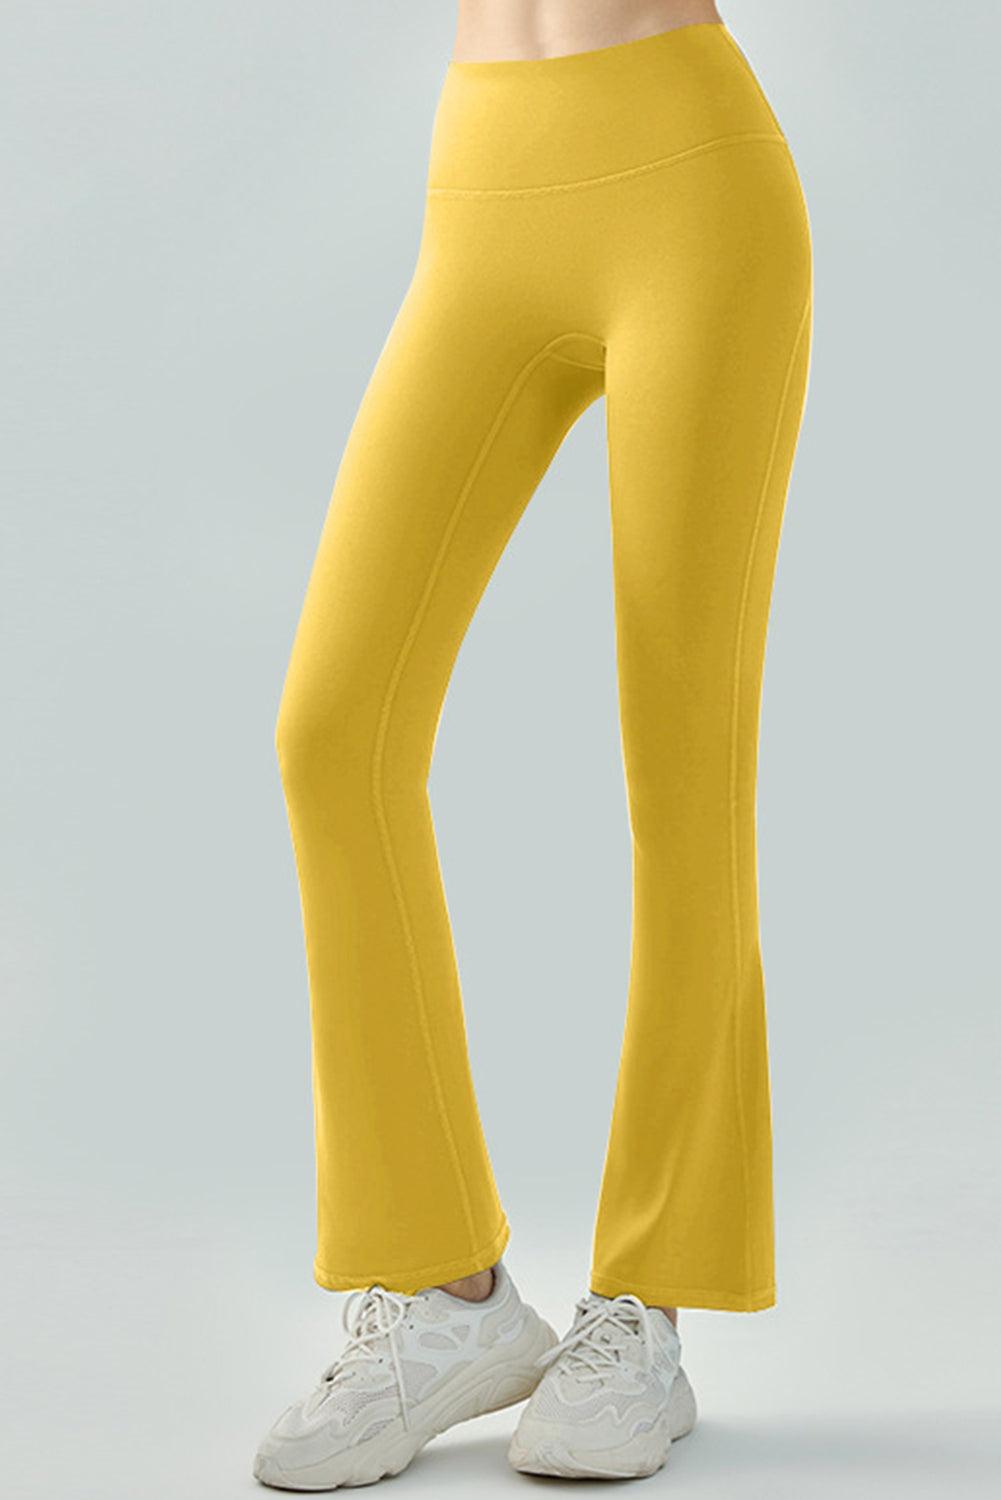 Ginger Crossed High Waist Flare Yoga Pants - L & M Kee, LLC